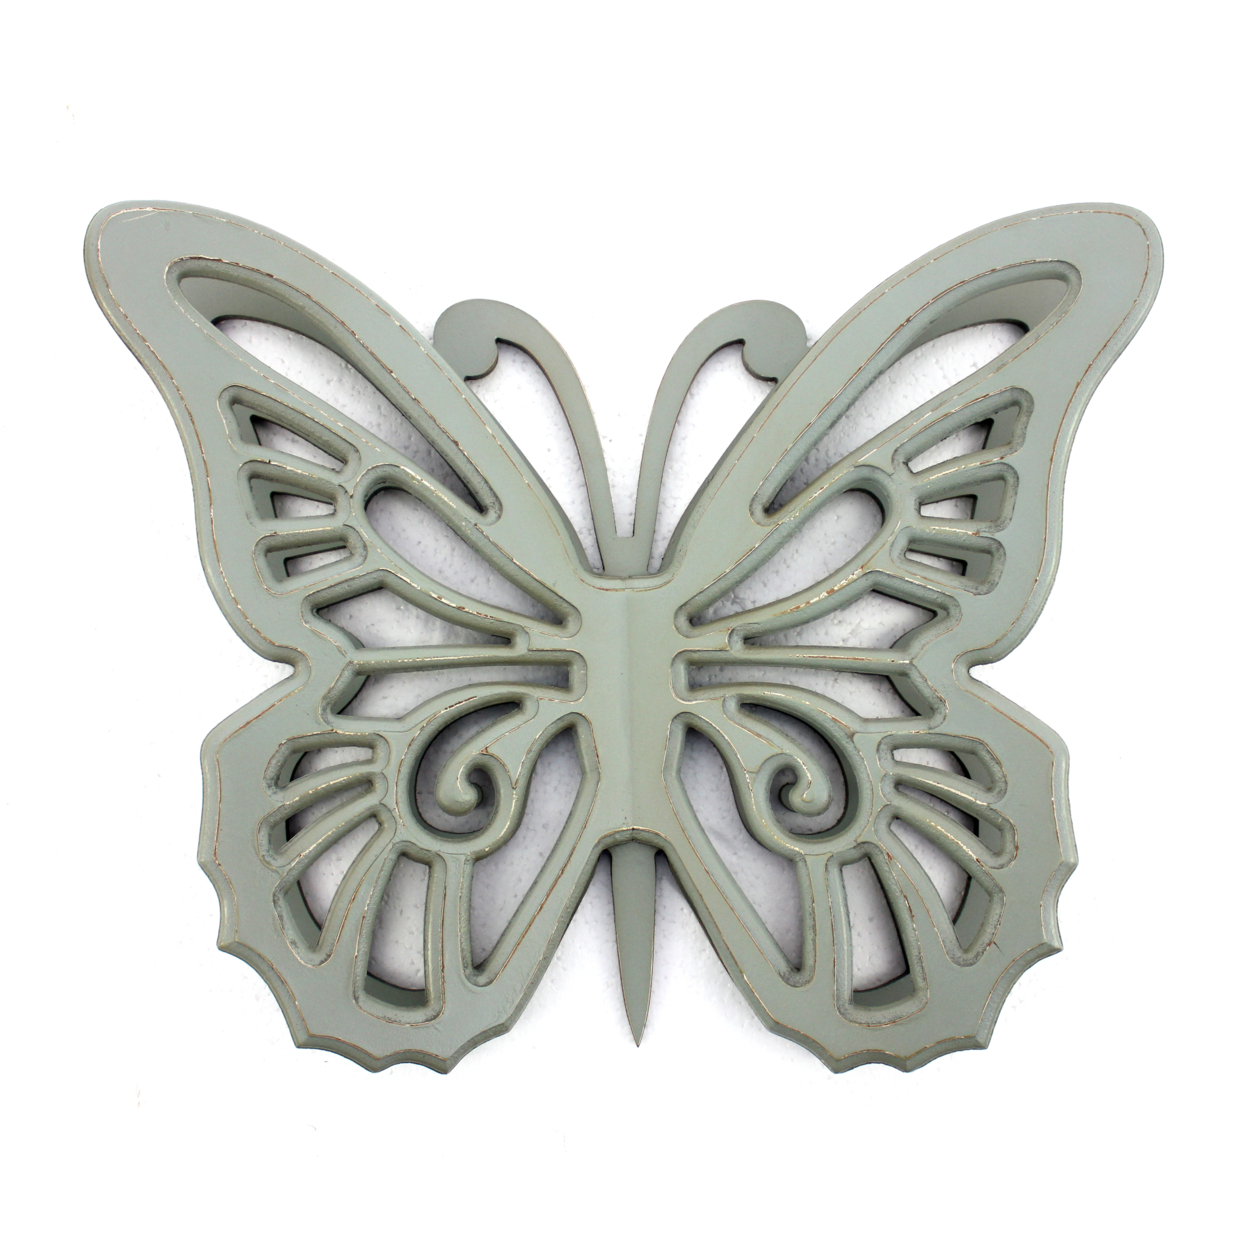 Wooden Butterfly Wall Plaque With Cutout Detail, Light Gray- Saltoro Sherpi